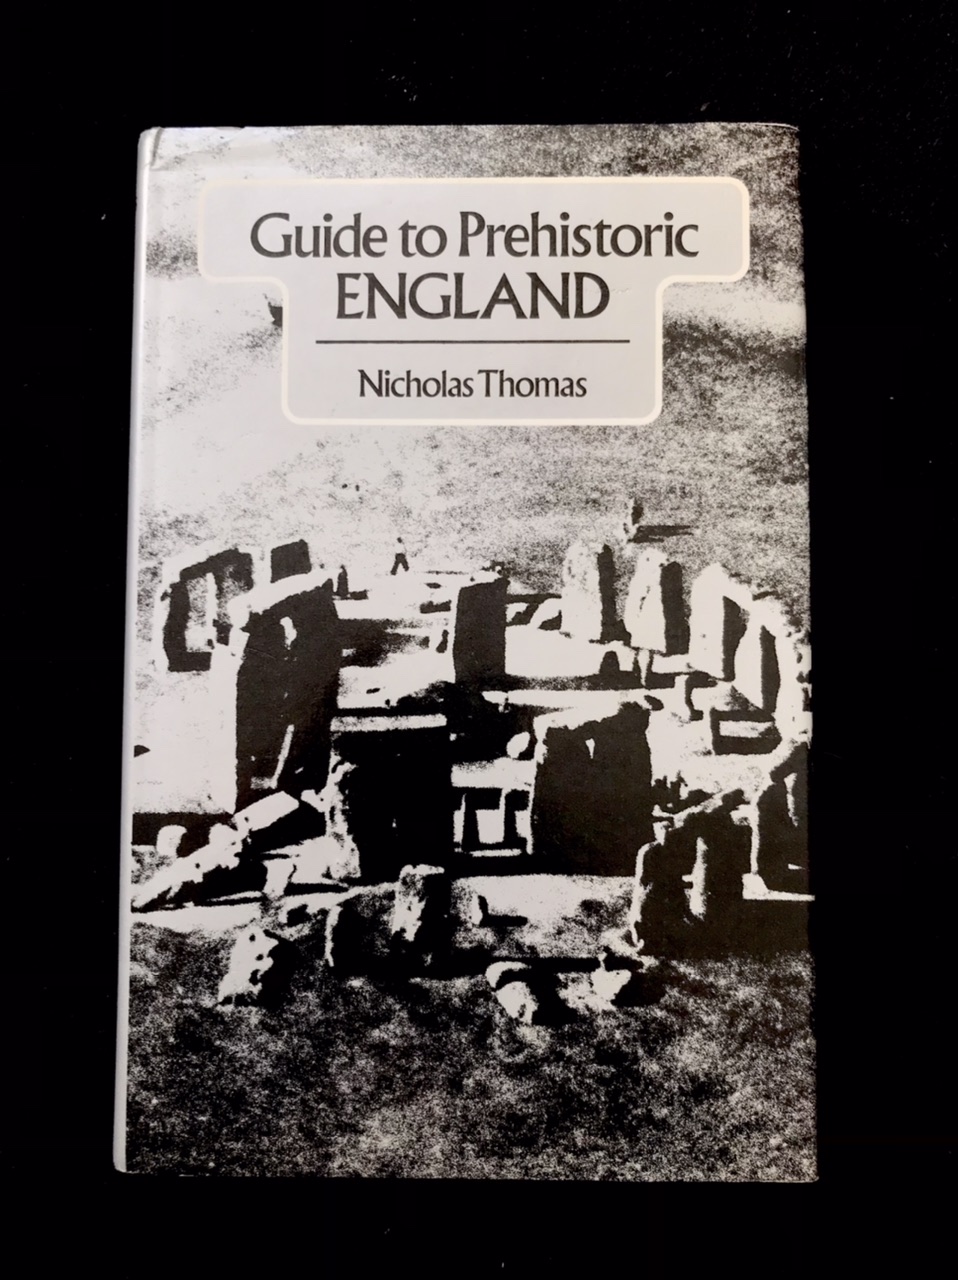 Guide to Prehistoric England by Nicholas Thomas